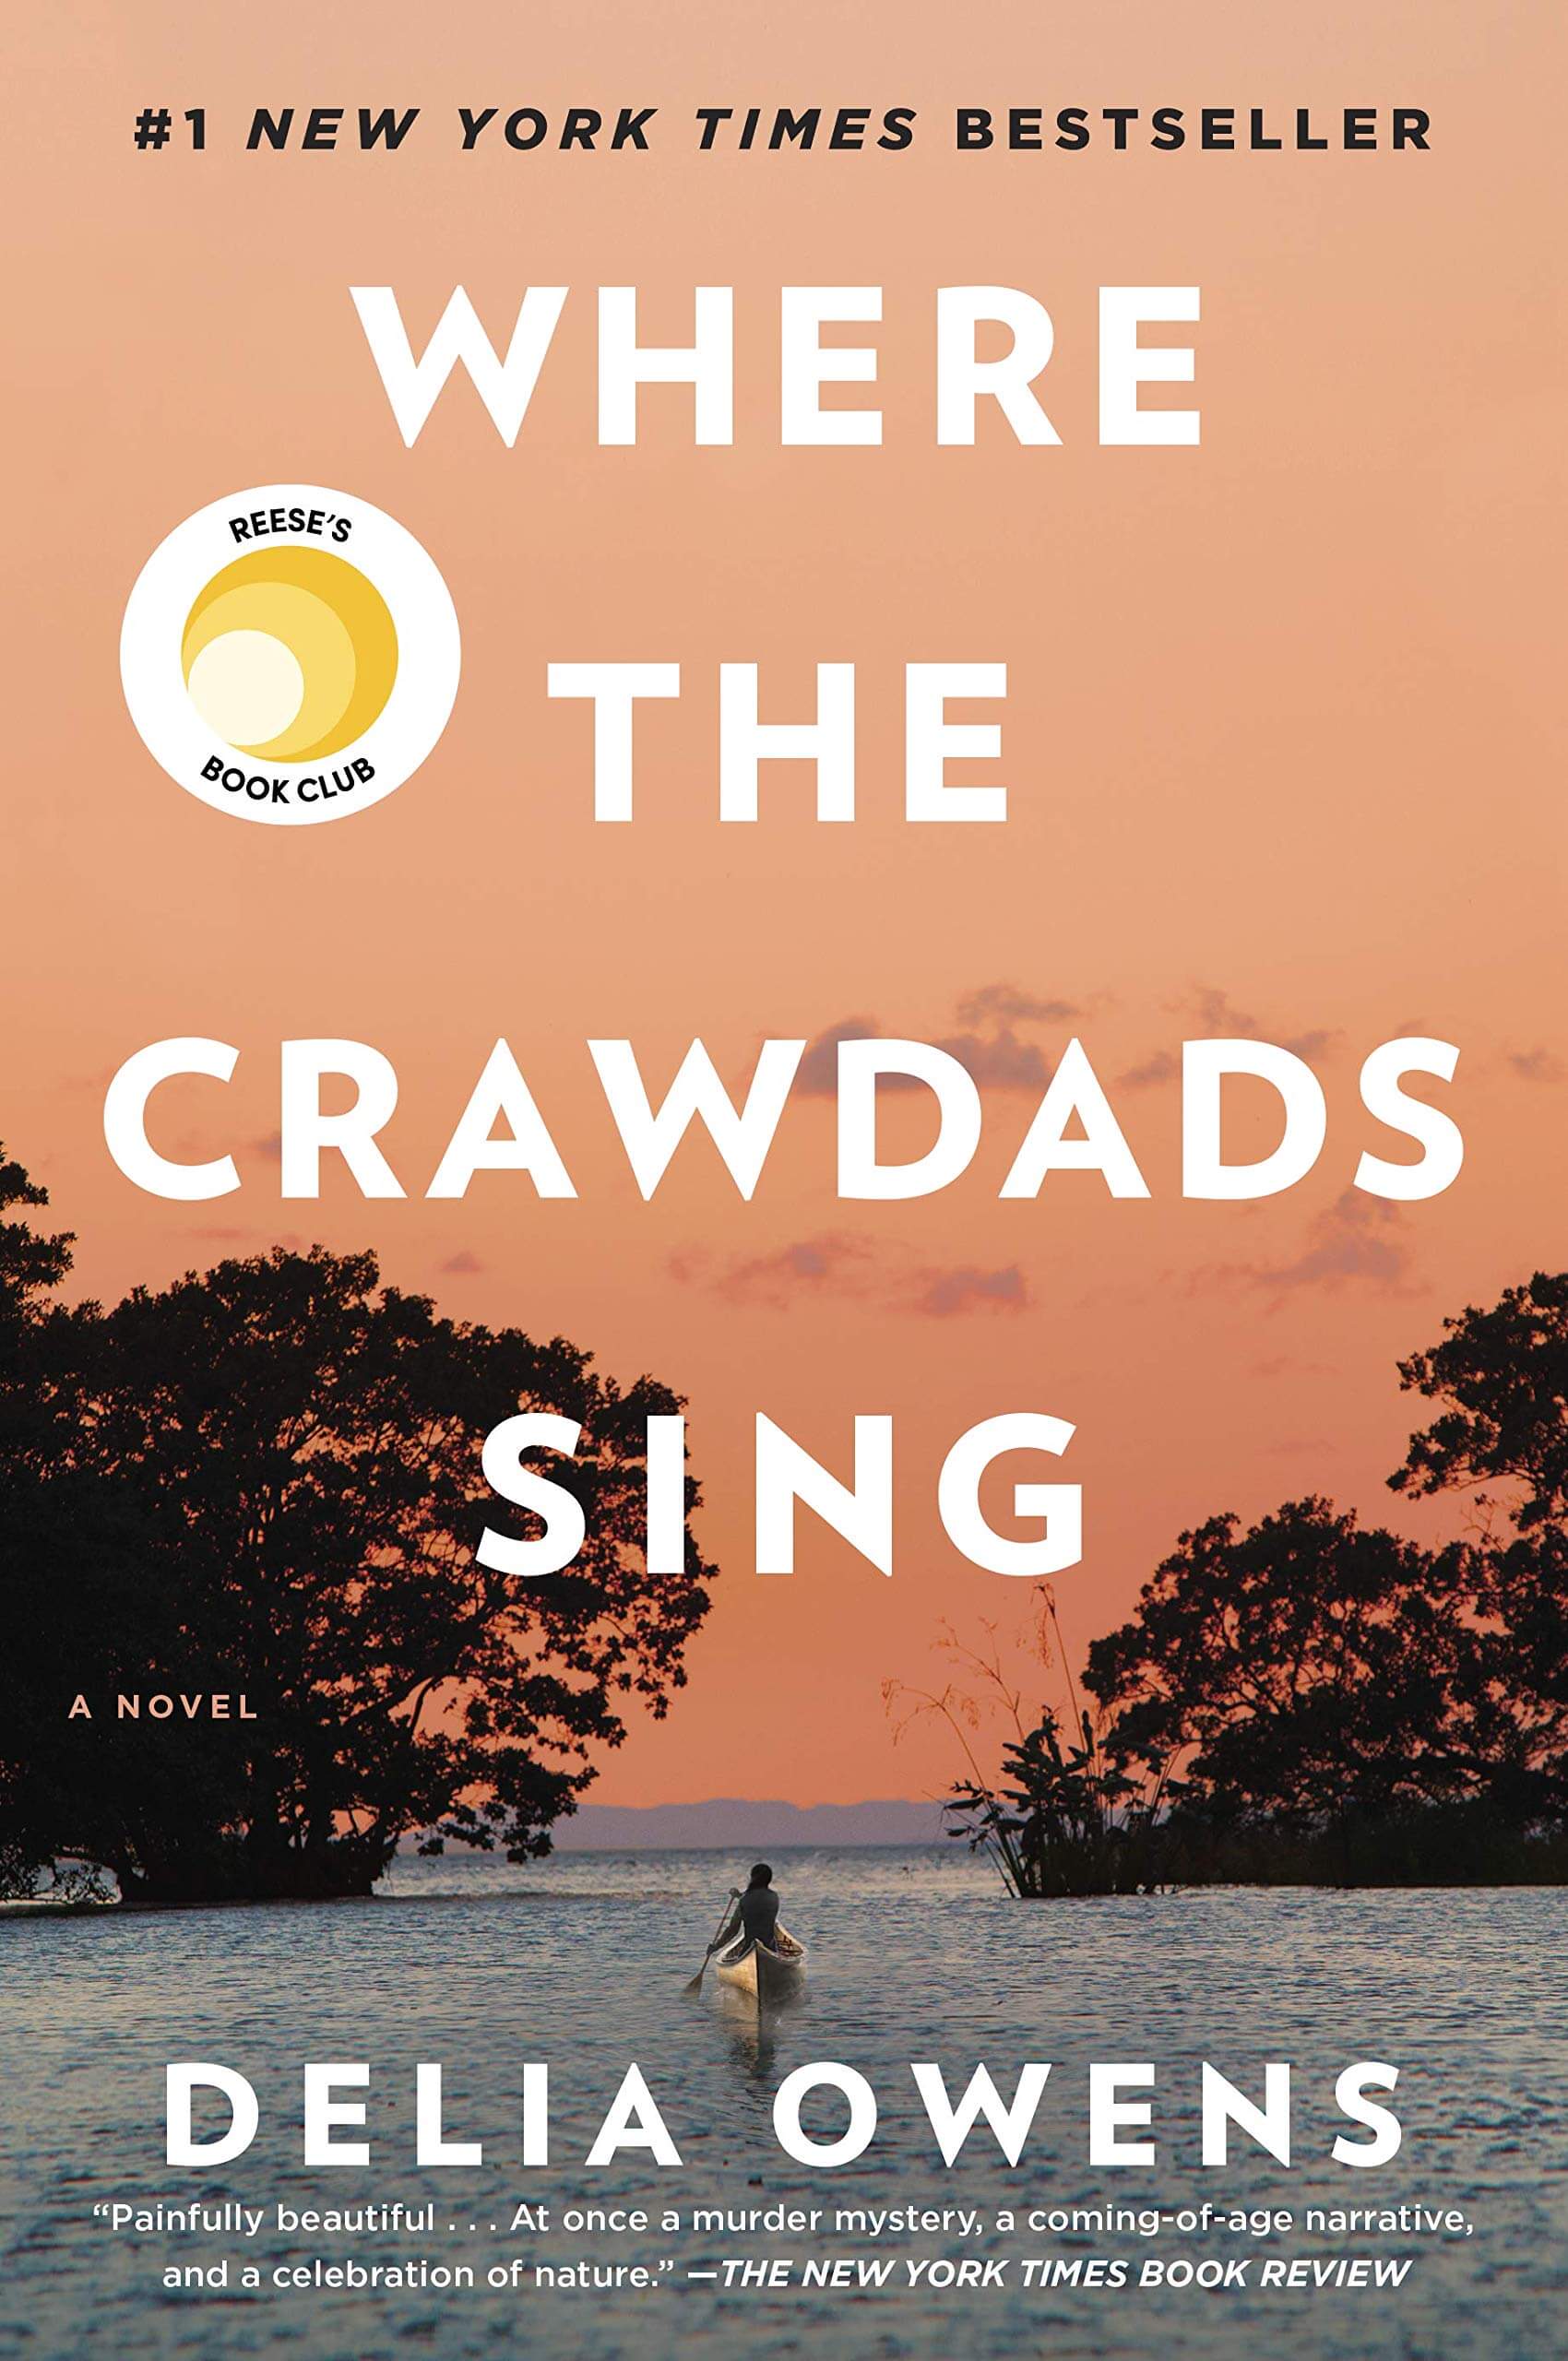 Crawdads book cover